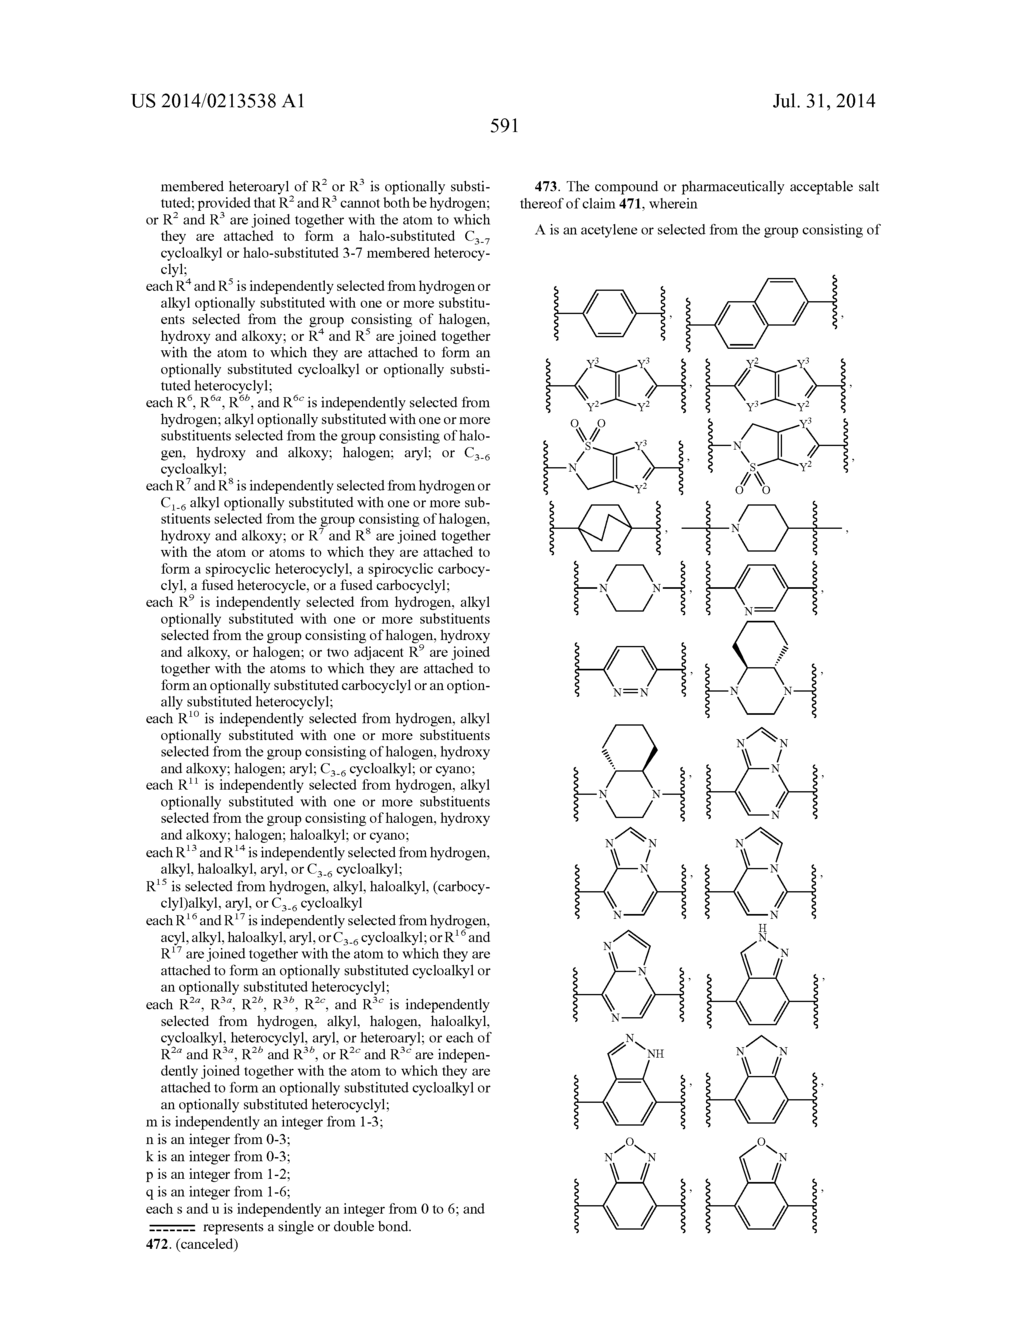 LYSOPHOSPHATIDIC ACID RECEPTOR ANTAGONISTS - diagram, schematic, and image 592